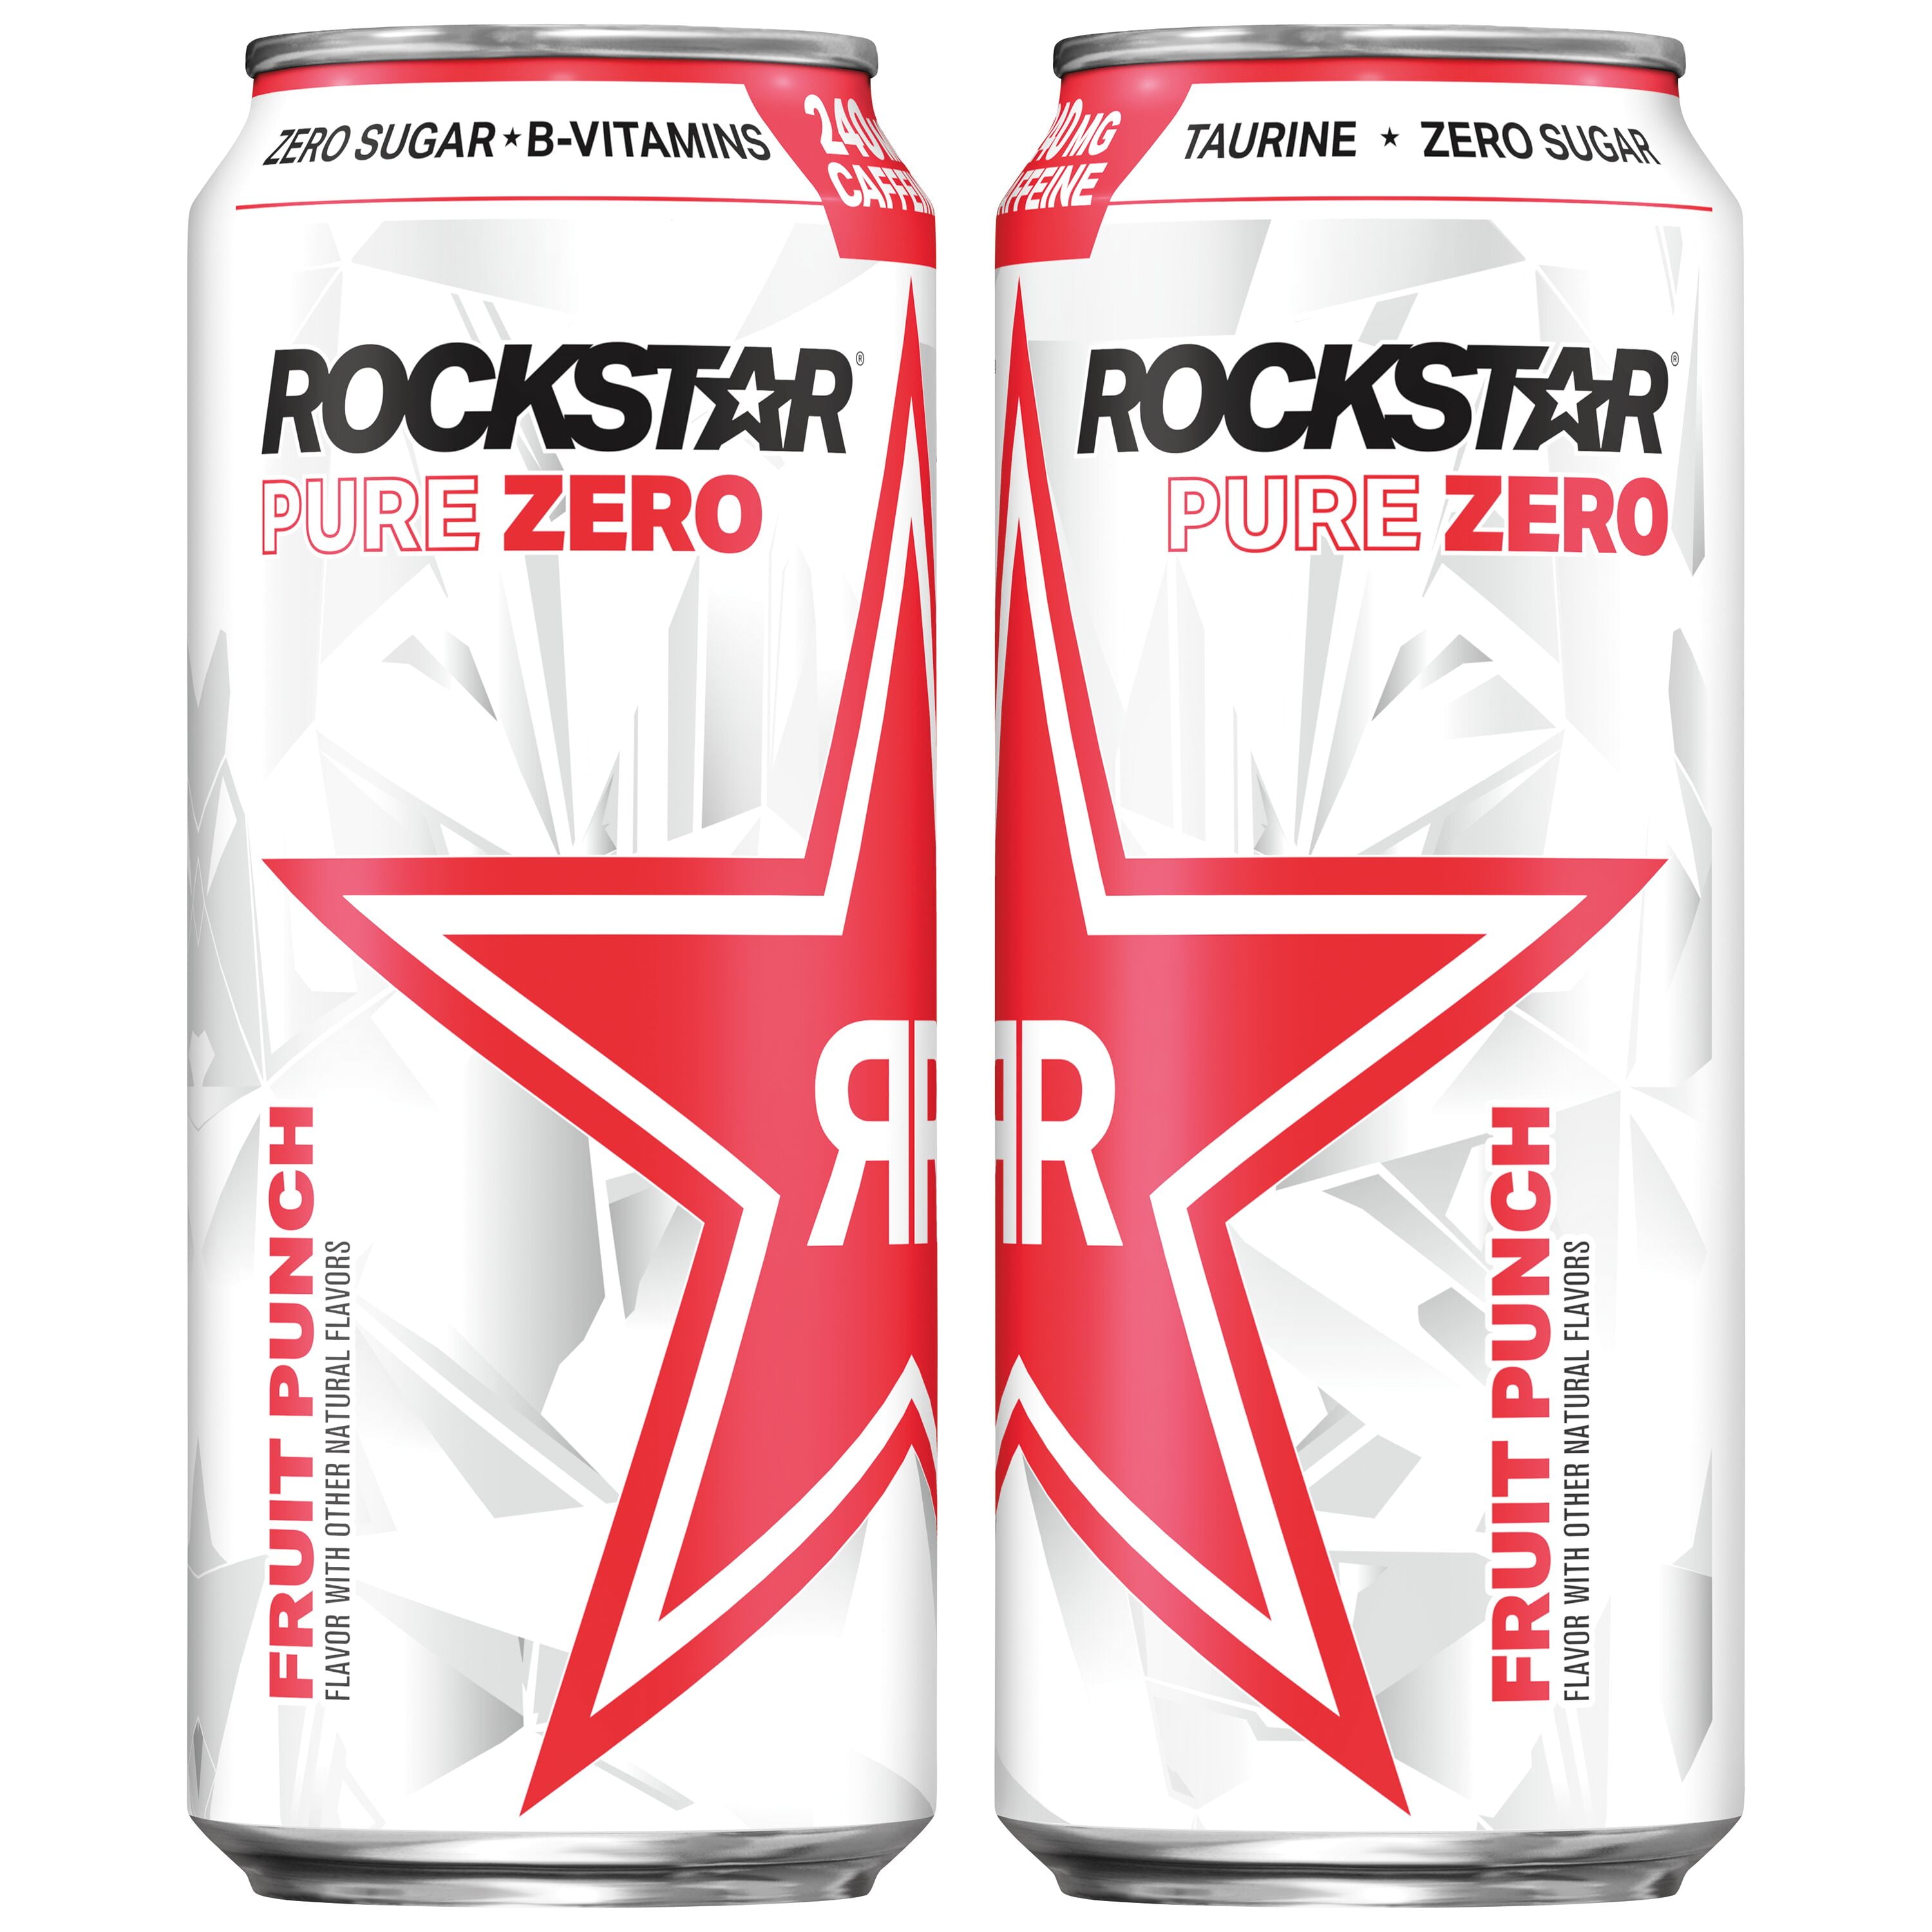 rockstar energy drink pink